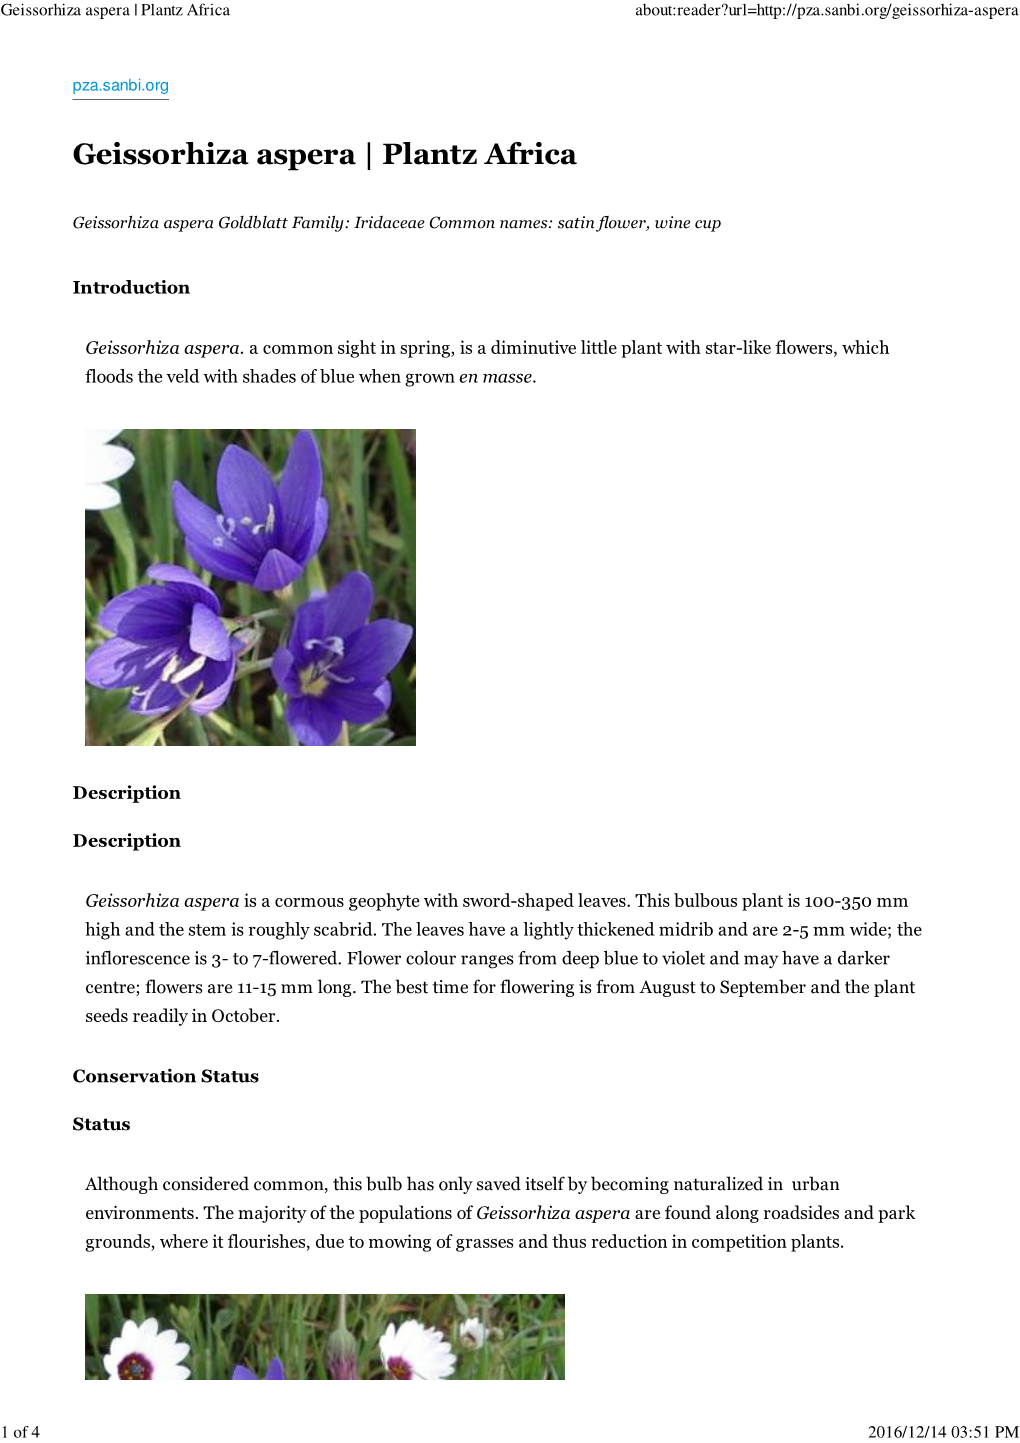 Geissorhiza Aspera | Plantz Africa About:Reader?Url=